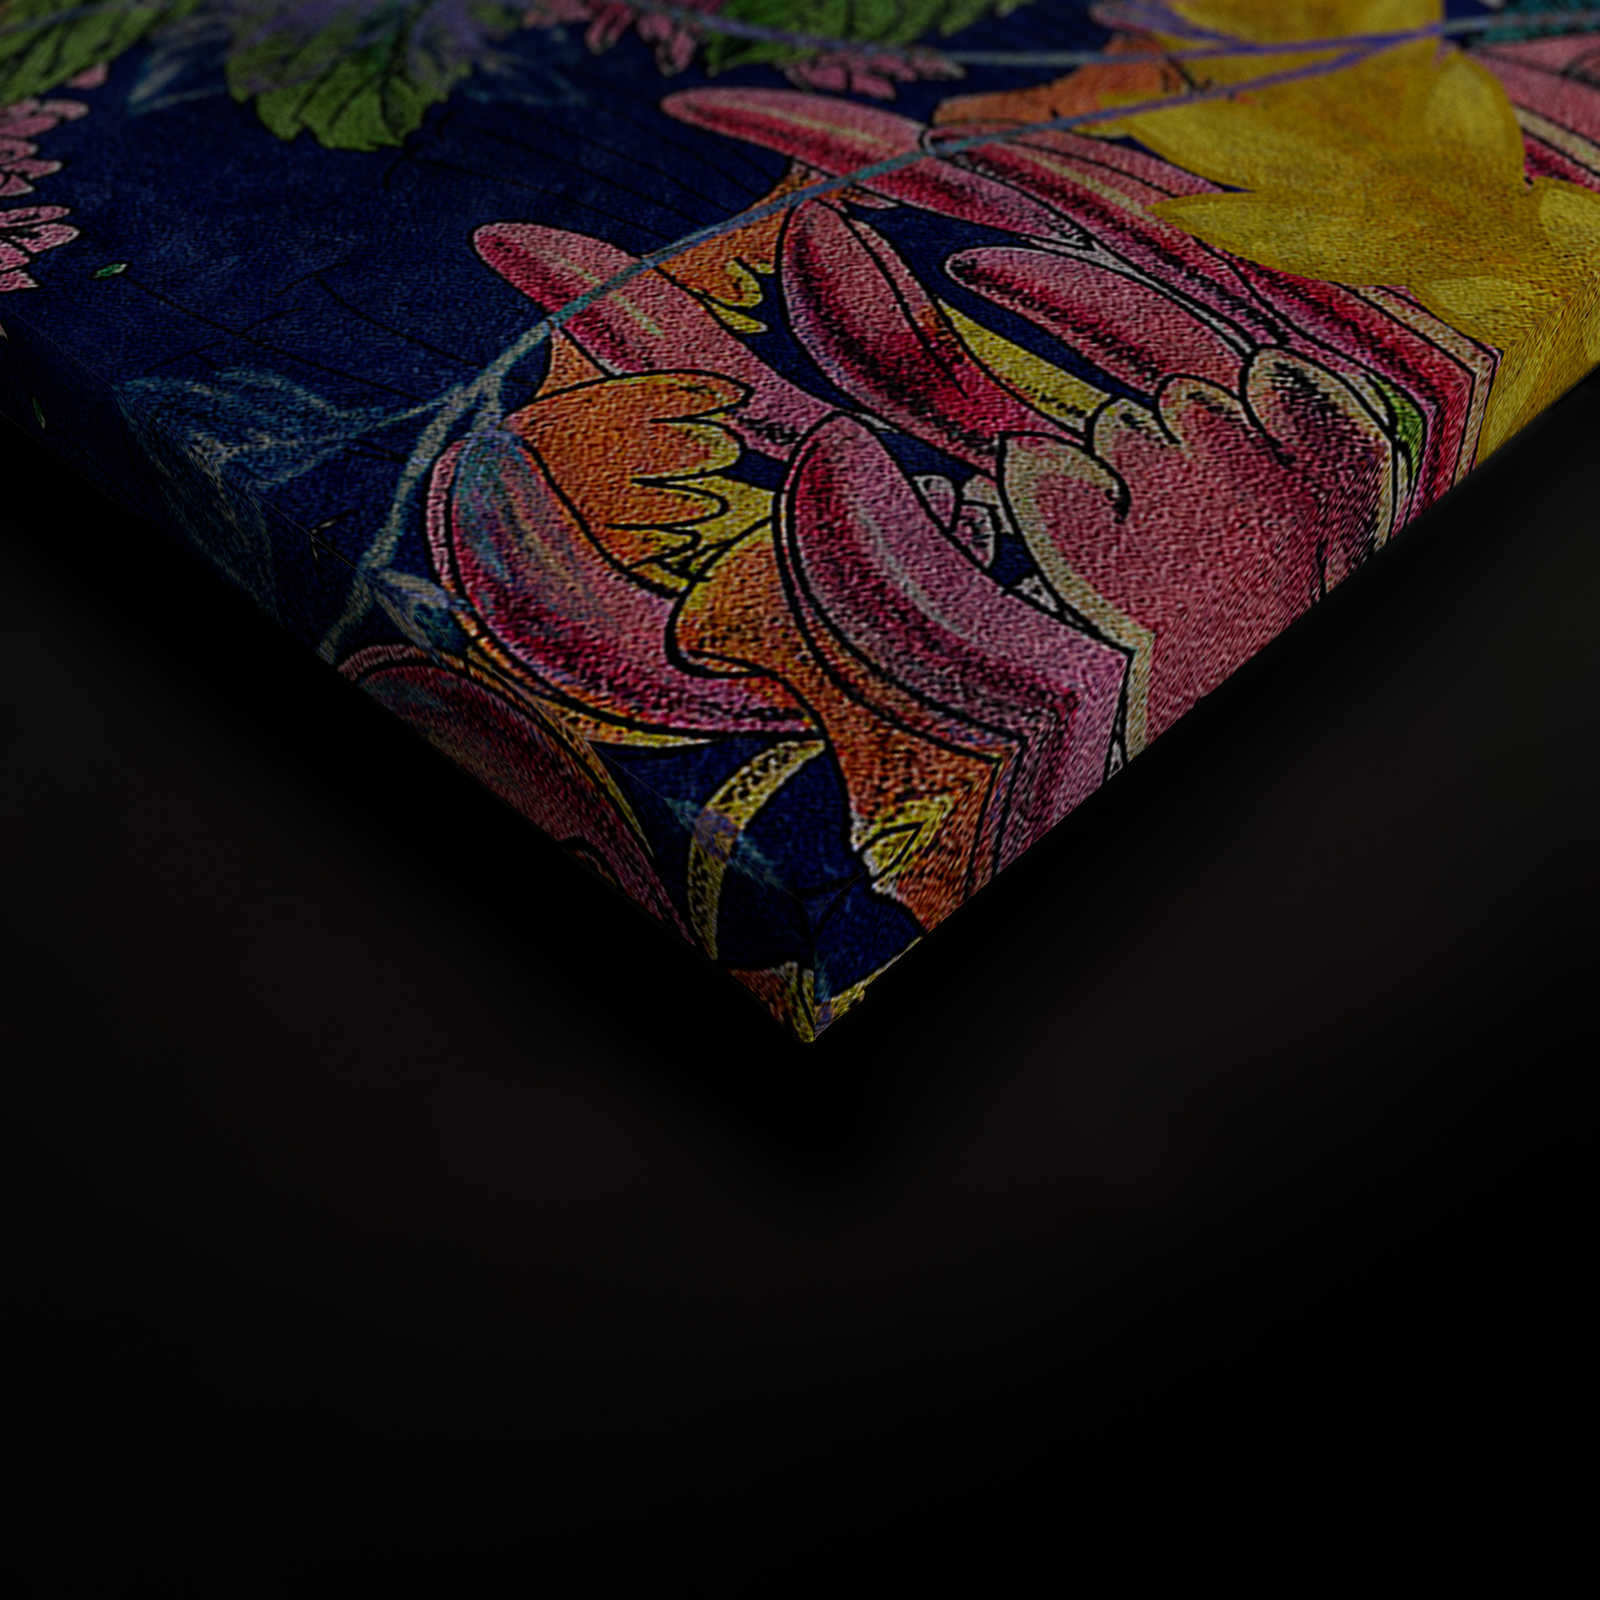             Tropical Hero 1 - Canvas painting Flowers & Parrot intense colours - 1,20 m x 0,80 m
        